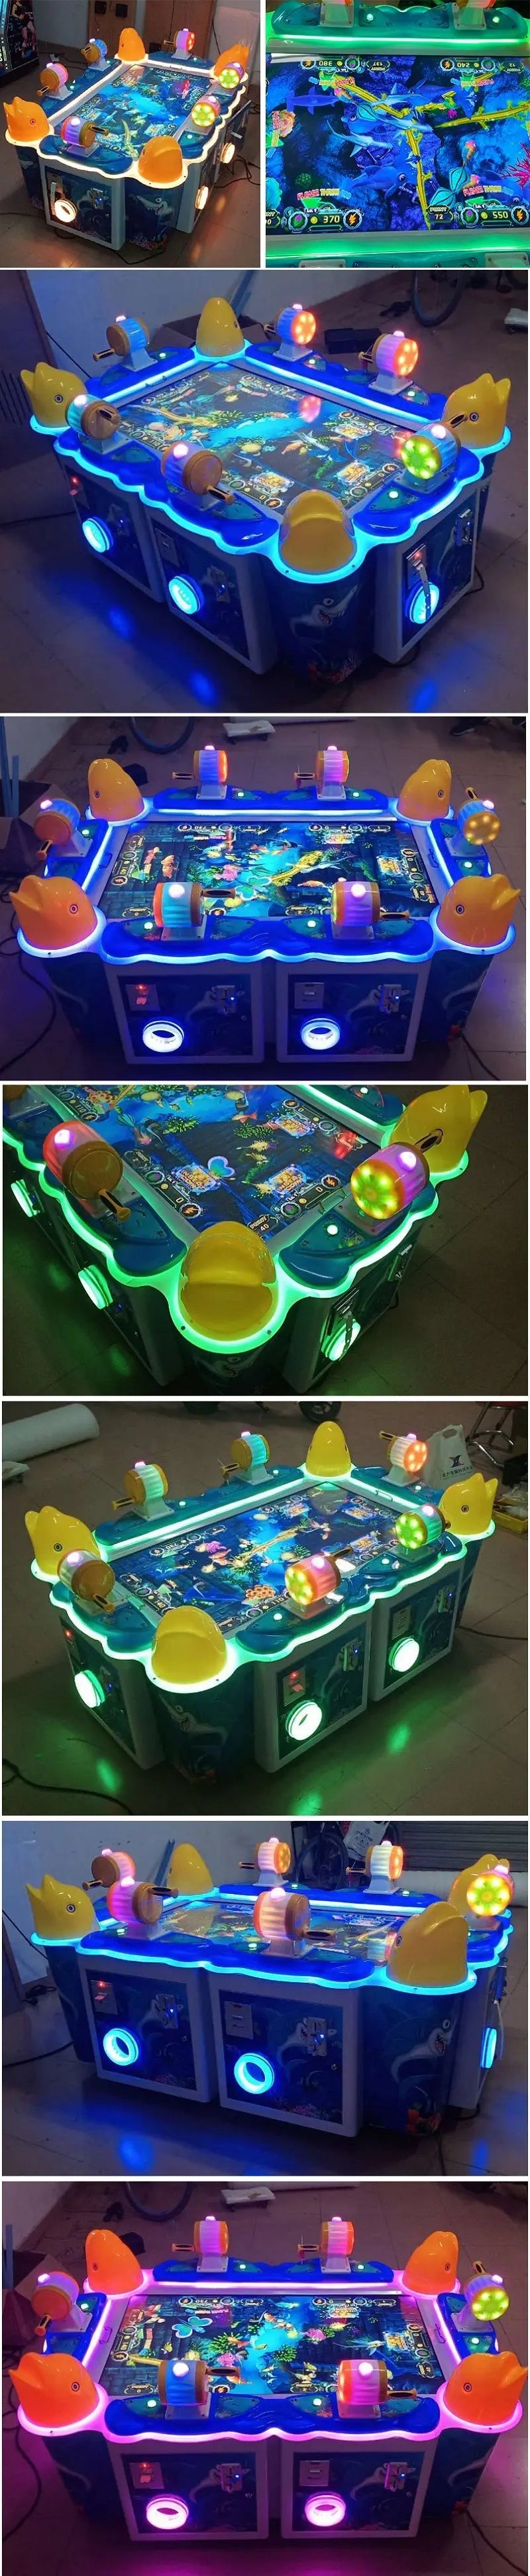 6-Players-Fishing-fun-game-machine-Amusement-Game-Center-Coin-Operated-Arcade-Game-Machine-Tomy-Arcade